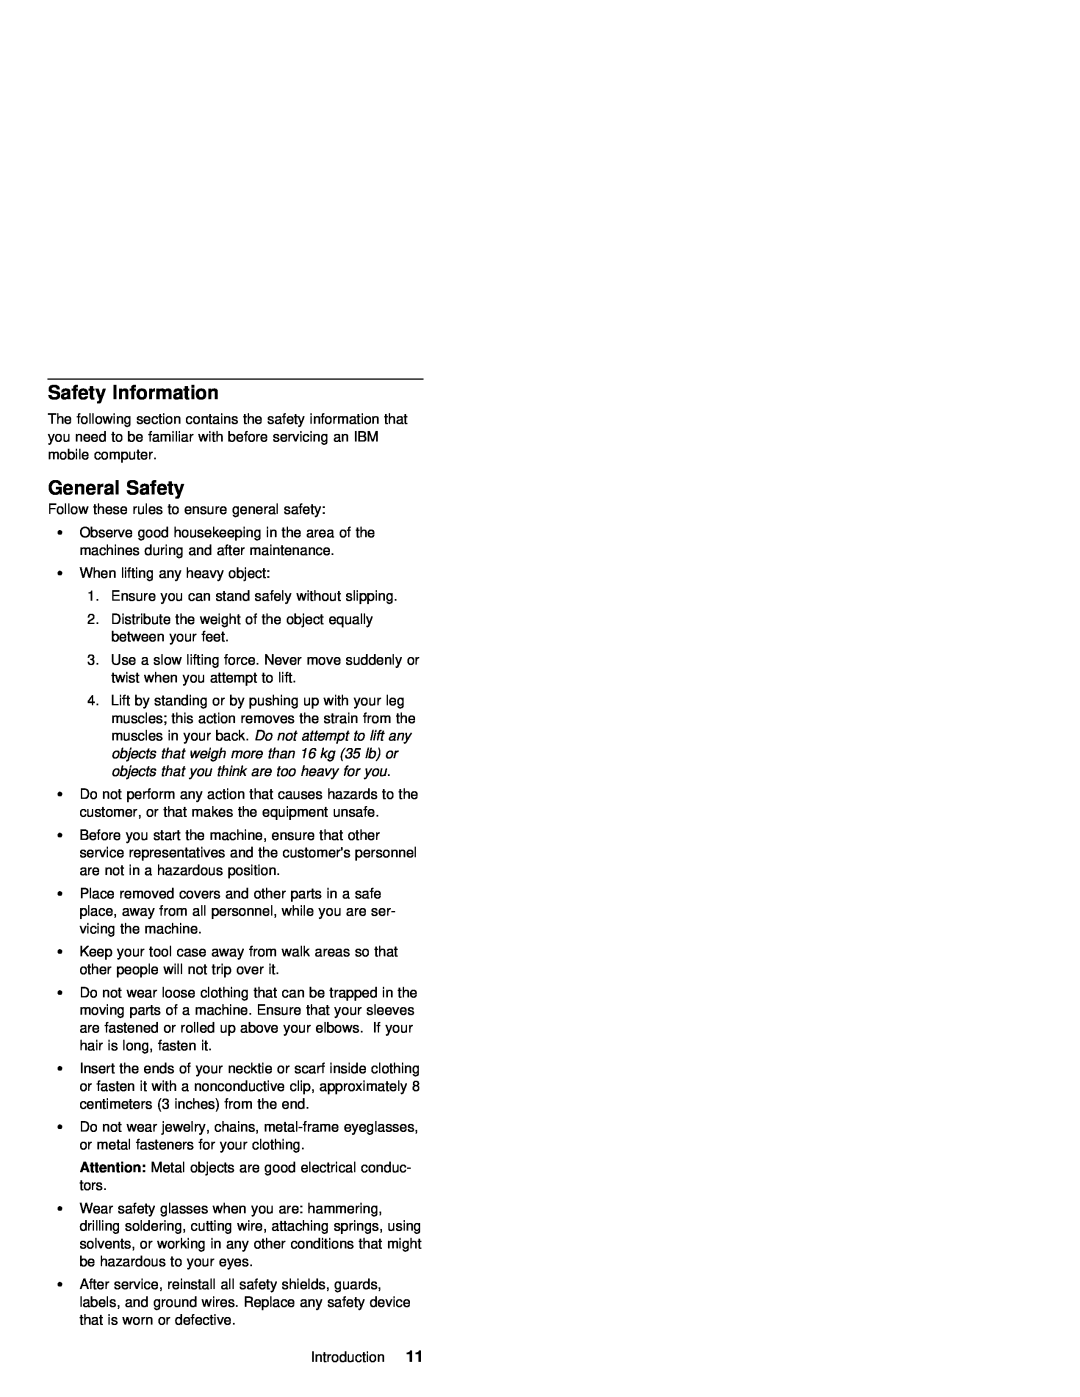 IBM 1400 (2611) manual Safety Information, General Safety 